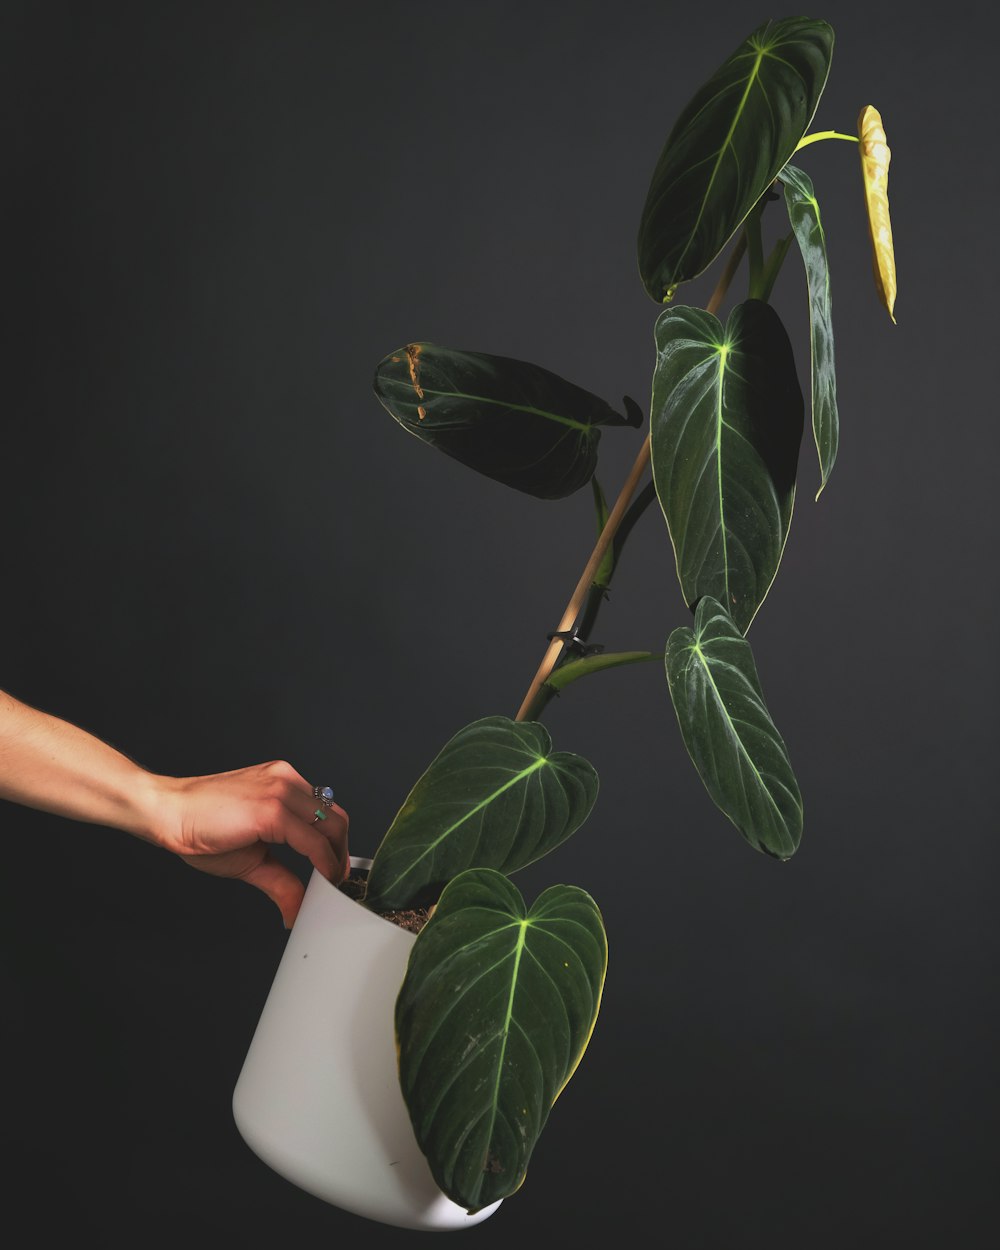 person holding green plant in white ceramic vase